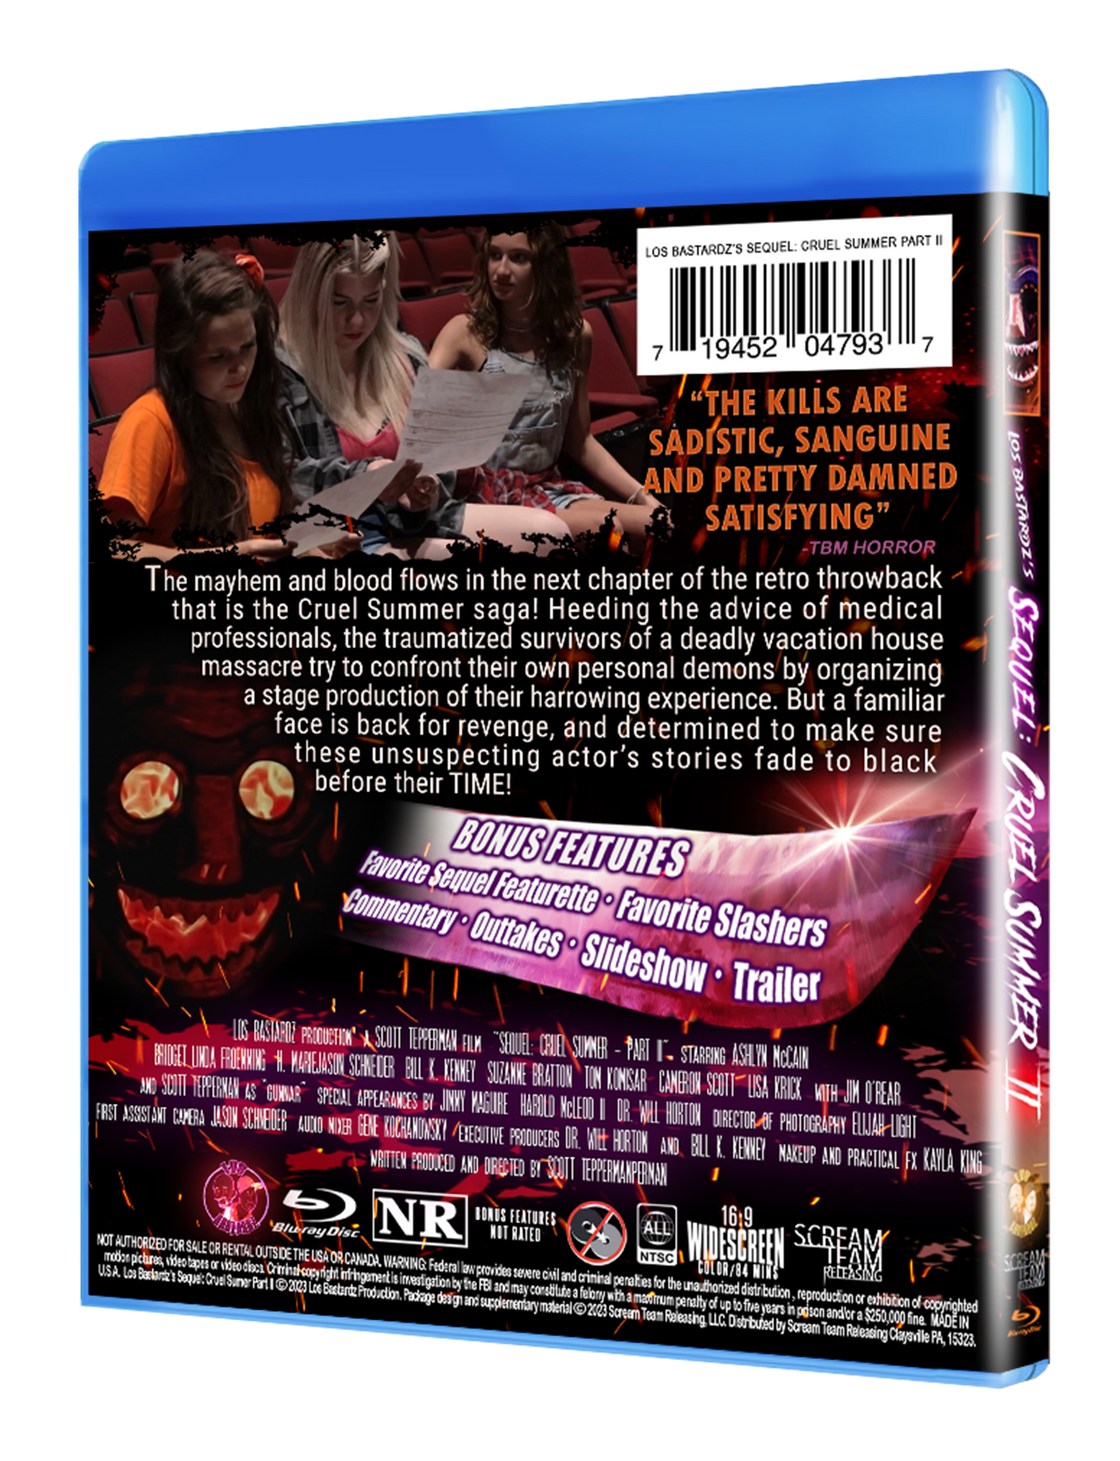 SEQUEL: Cruel Summer Part II- (Blu-ray)